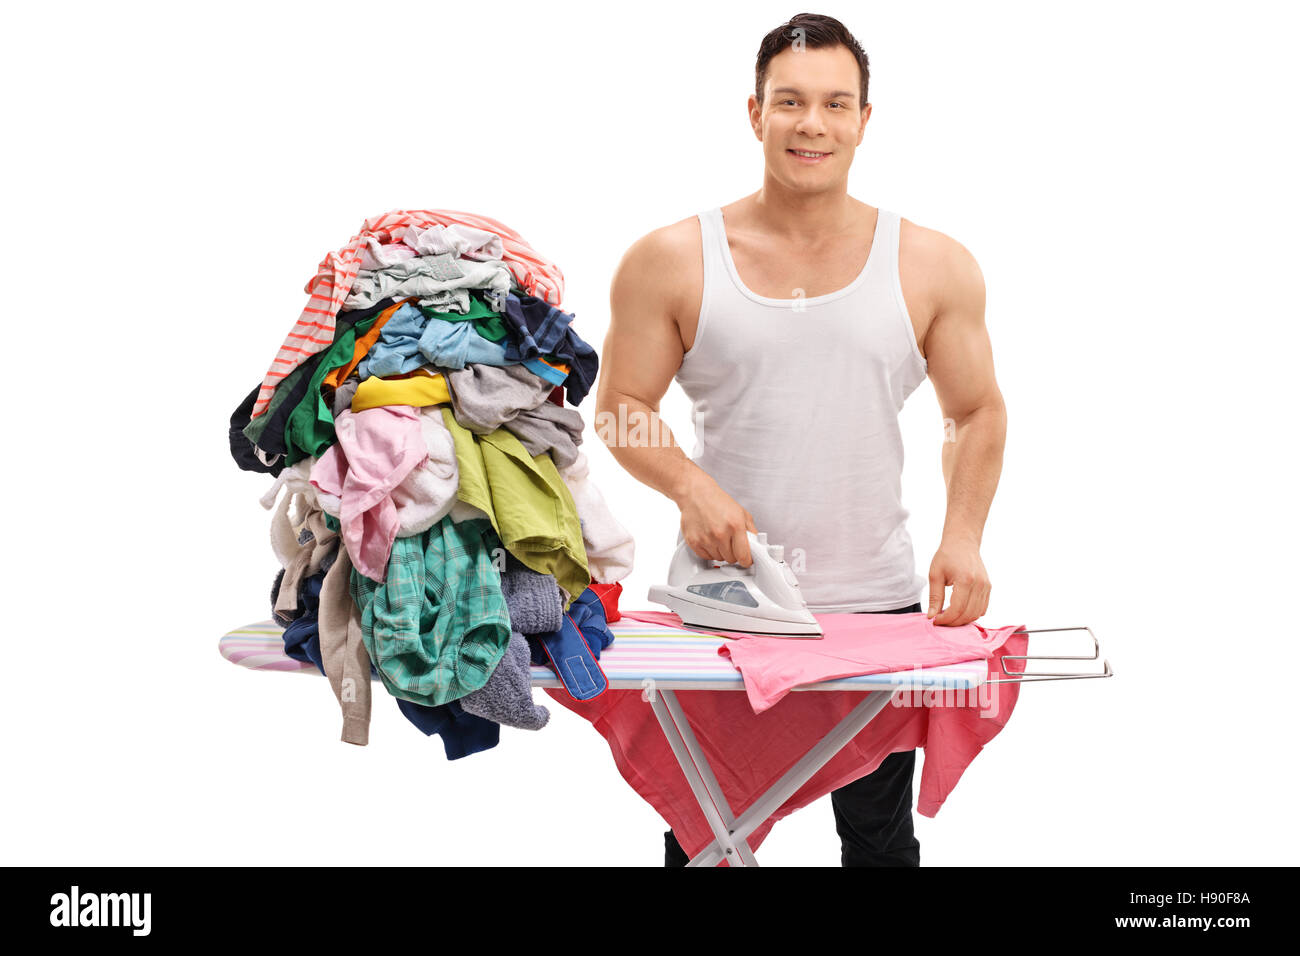 Joyful muscular guy ironing a pile of clothes isolated on white background  Stock Photo - Alamy